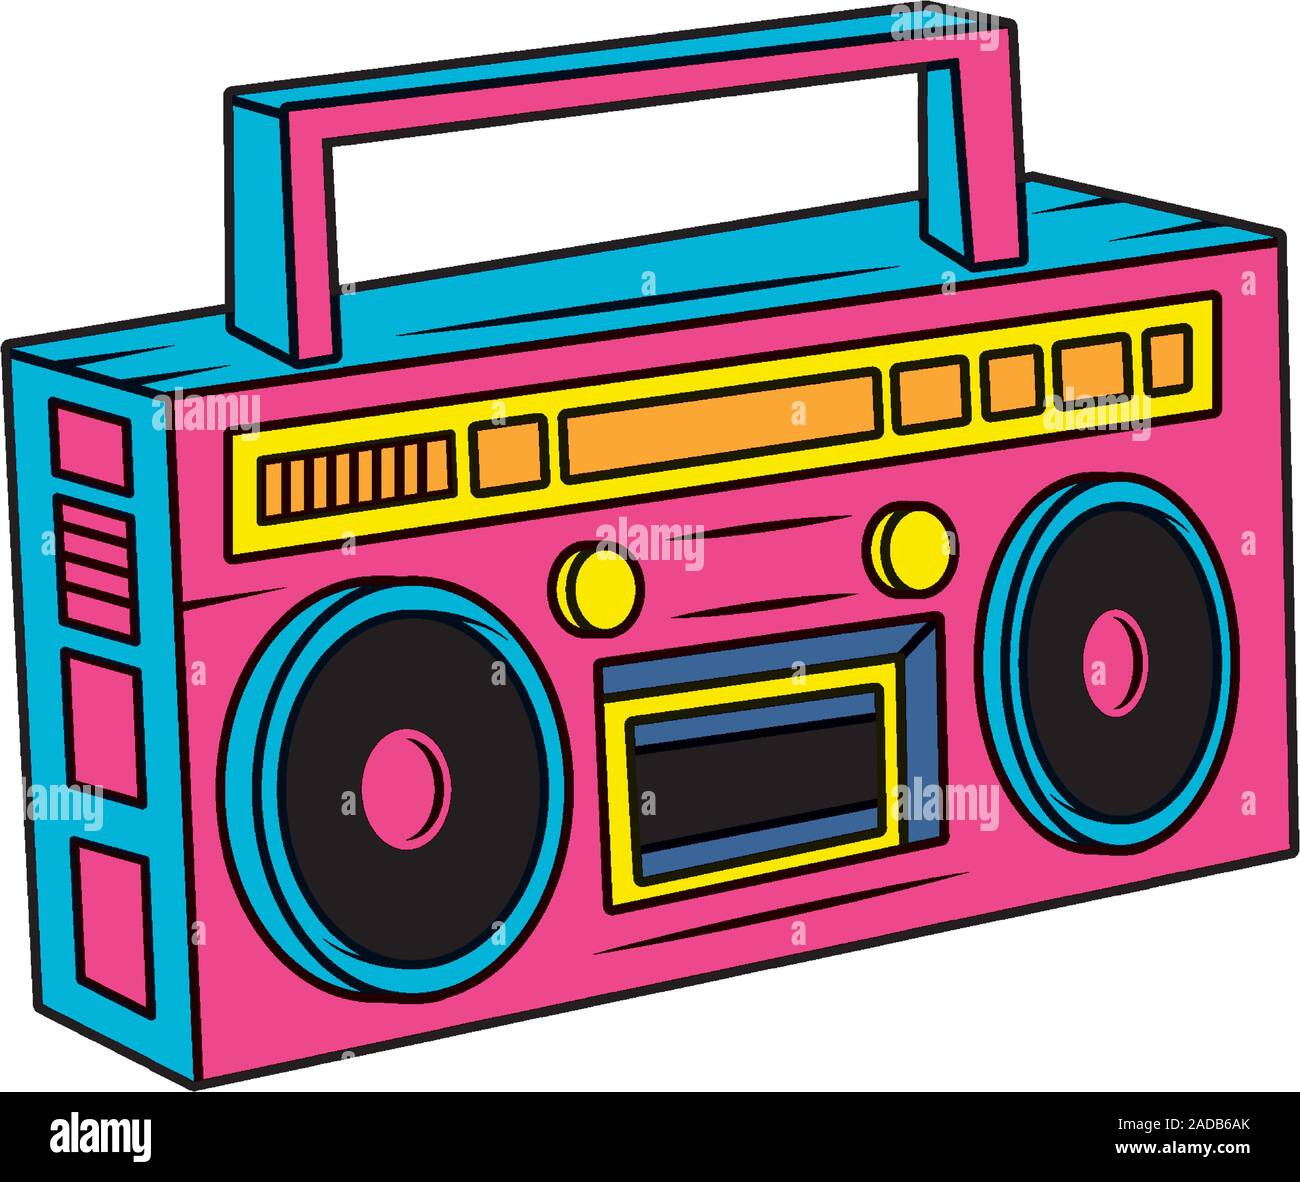 Radio retro music player estilo pop art Imagen Vector de stock - Alamy